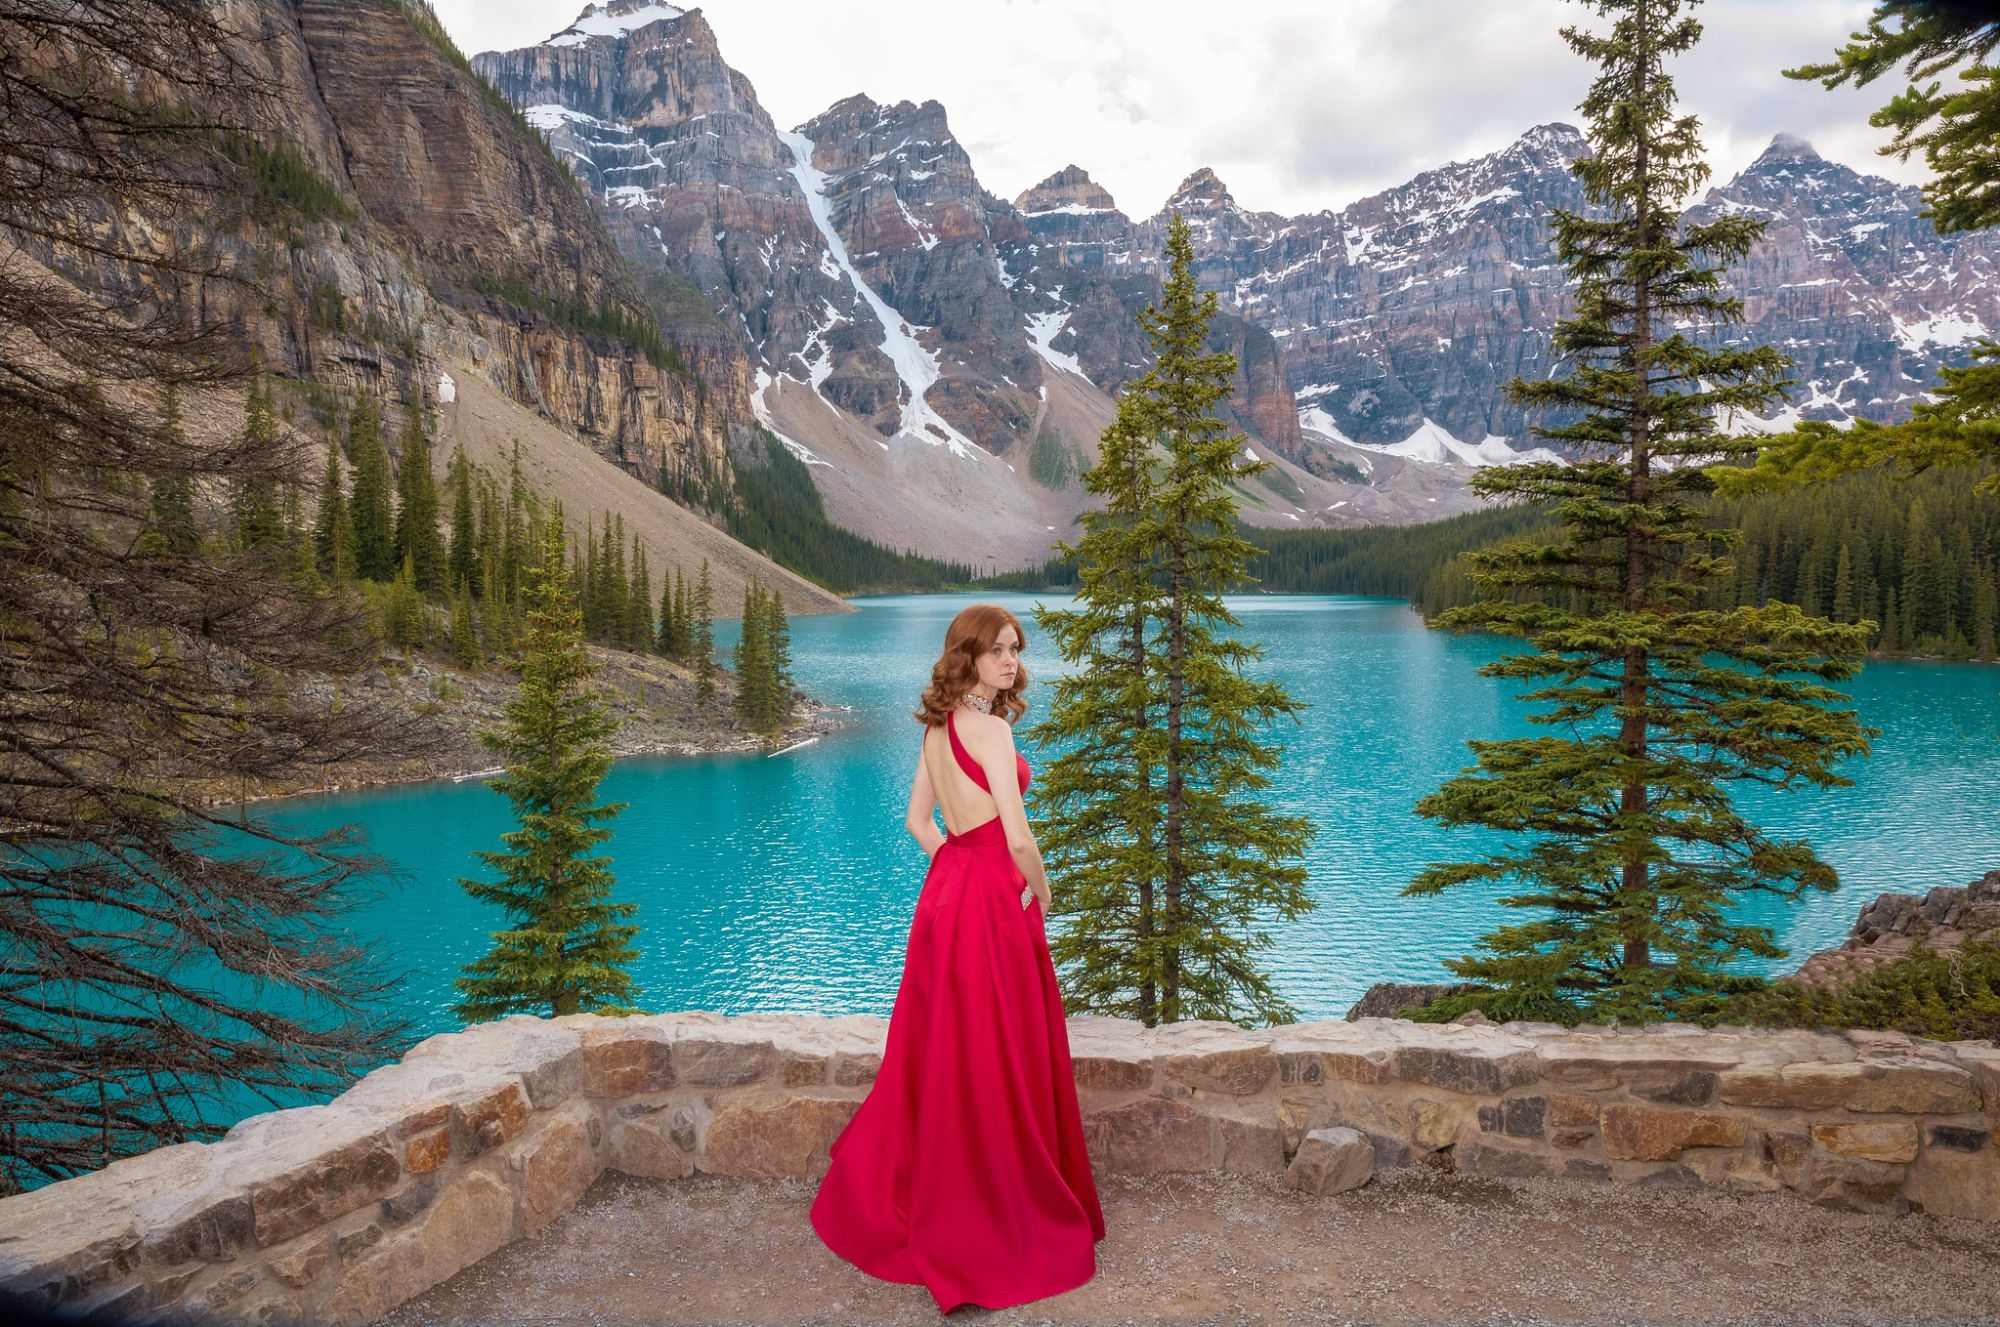 Christy Turner Photography/Aurora Media Wedding & Engagement Photography Cover Image